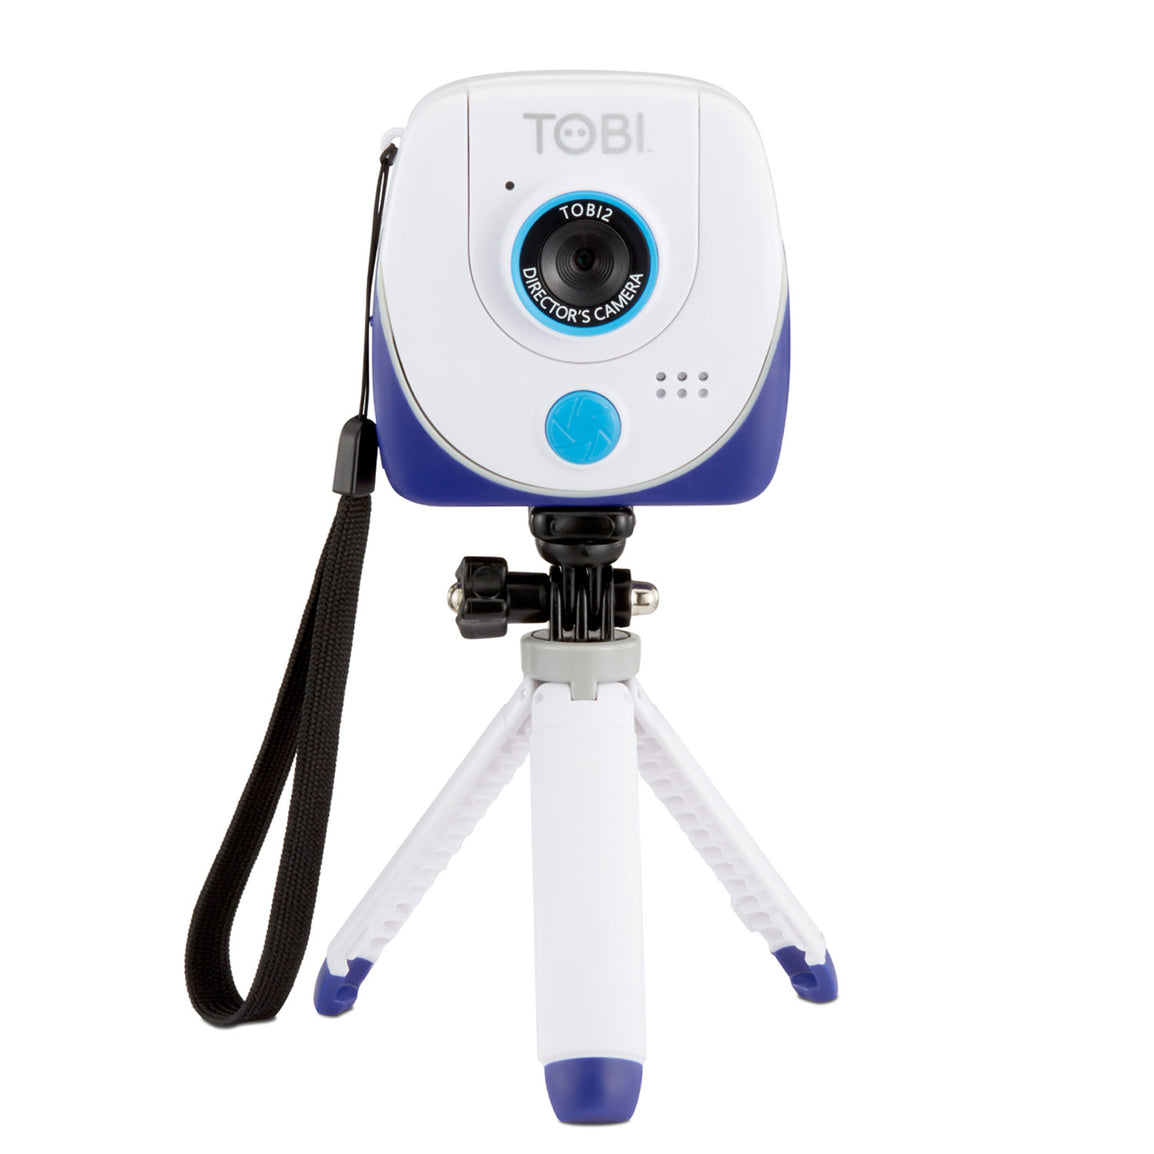 Tobi™ 2 Director's Camera